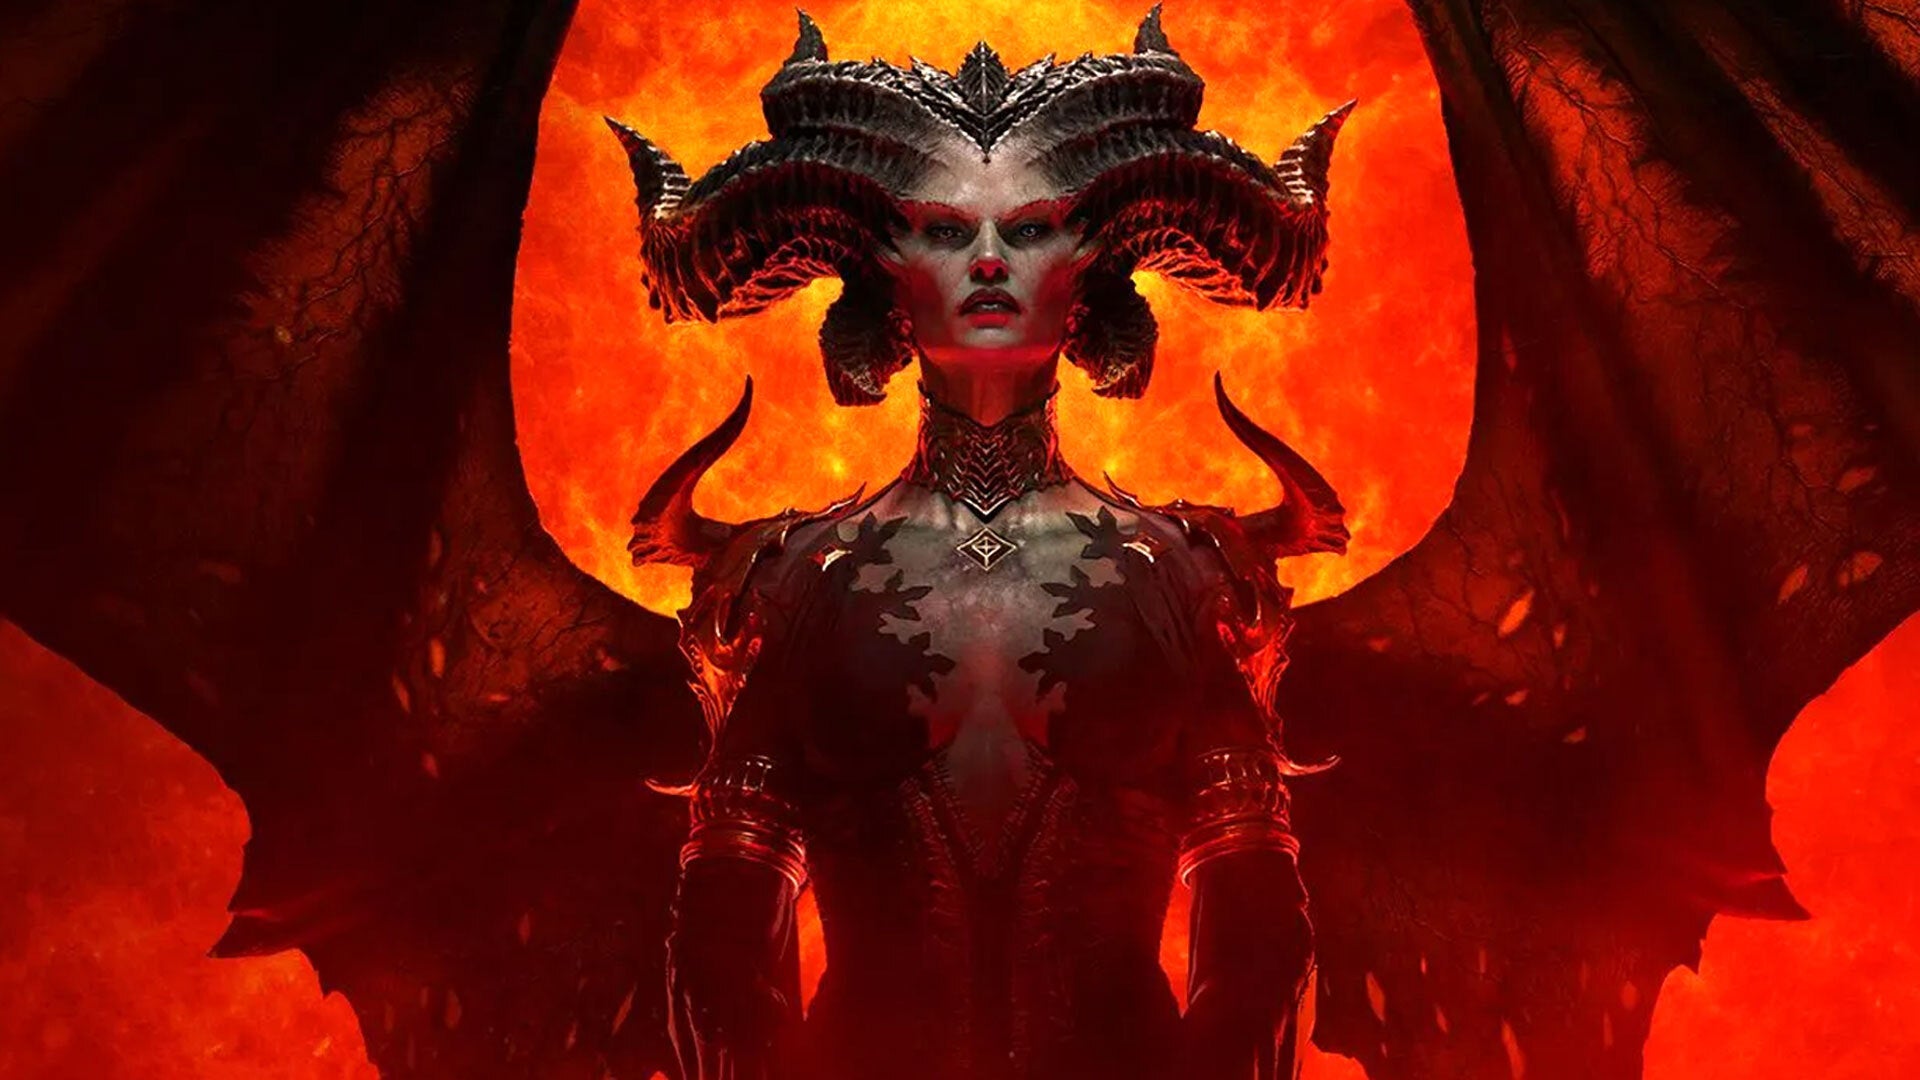 Diablo IV: Vessel of Hatred